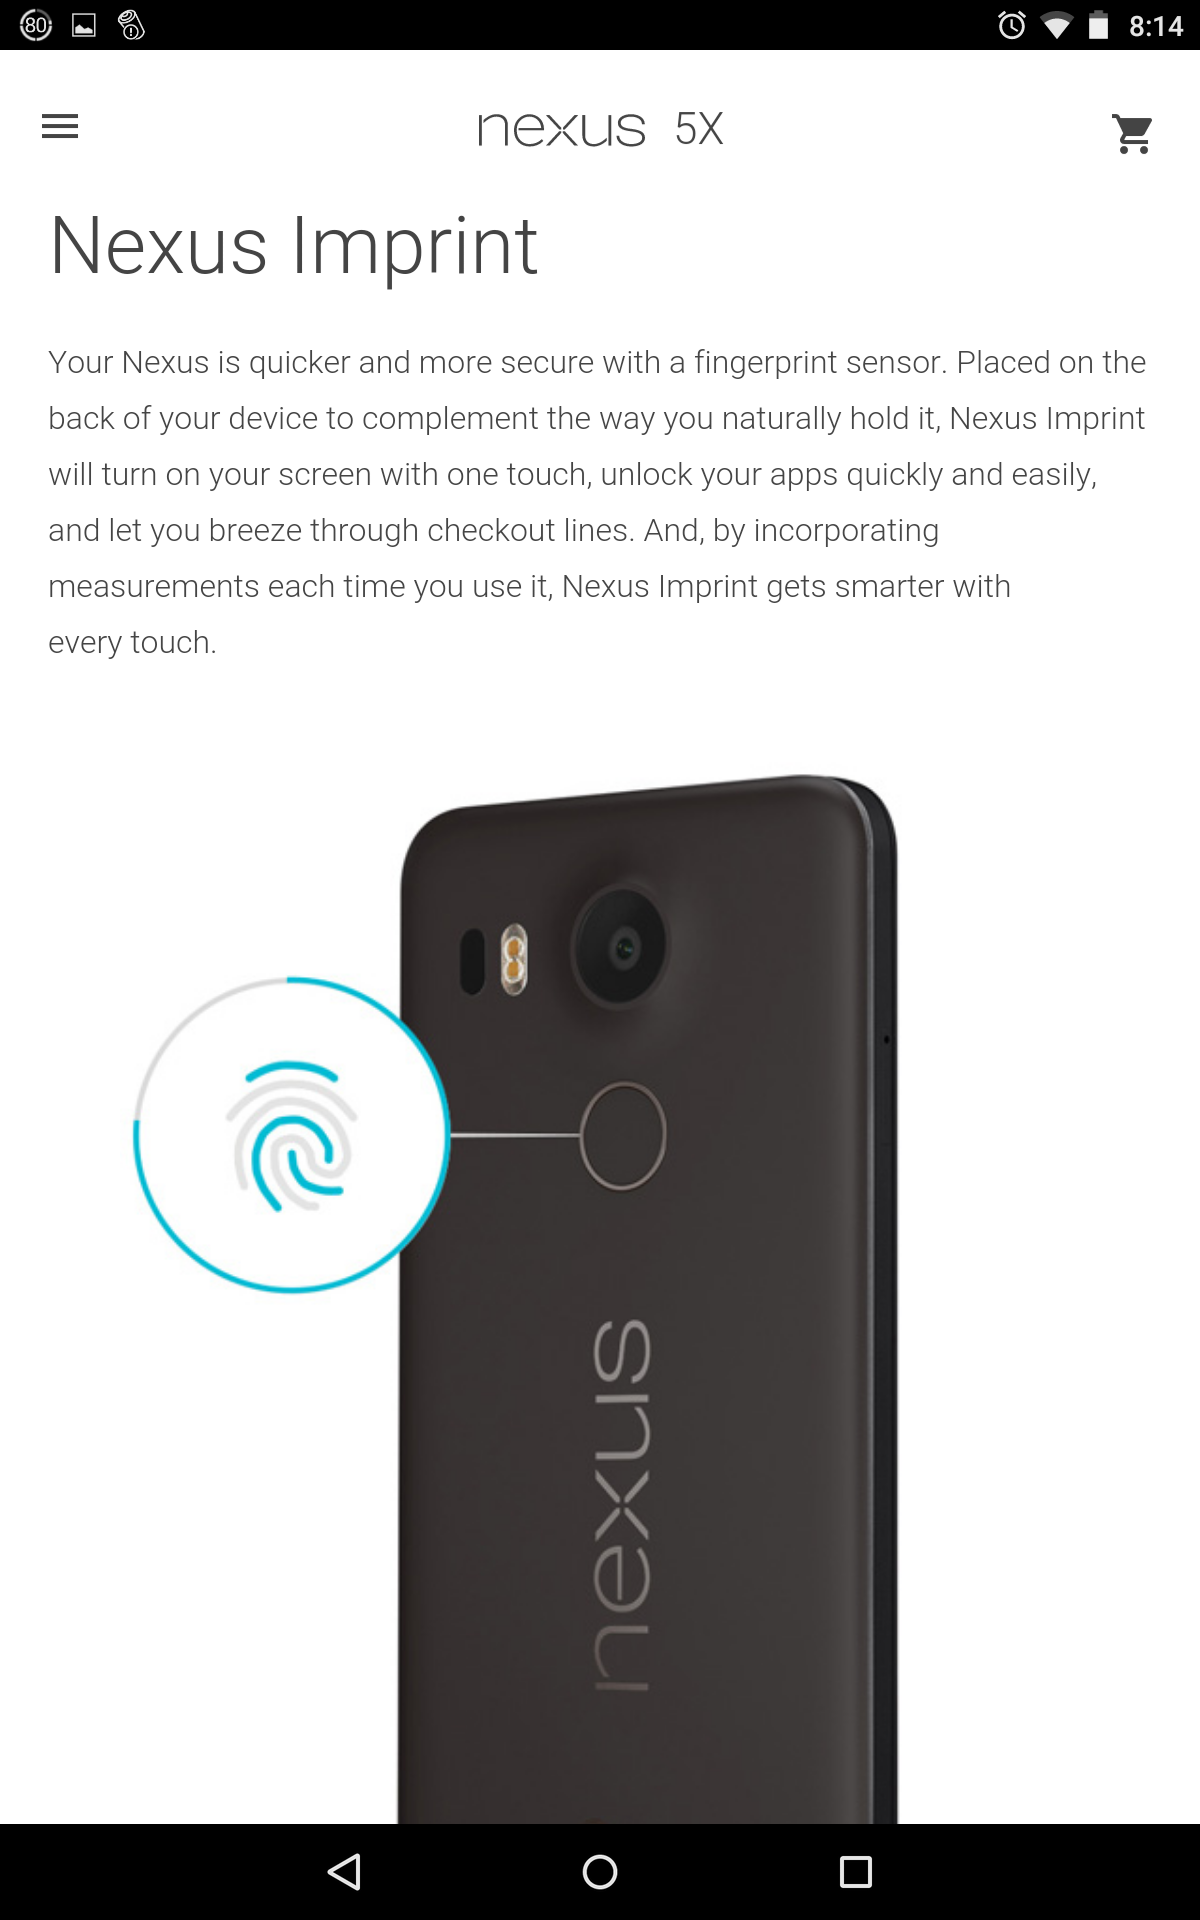 Screenshot_2015-10-12-20-14-56.png 신형 넥서스 5, Nexus 5X 예약판매 중